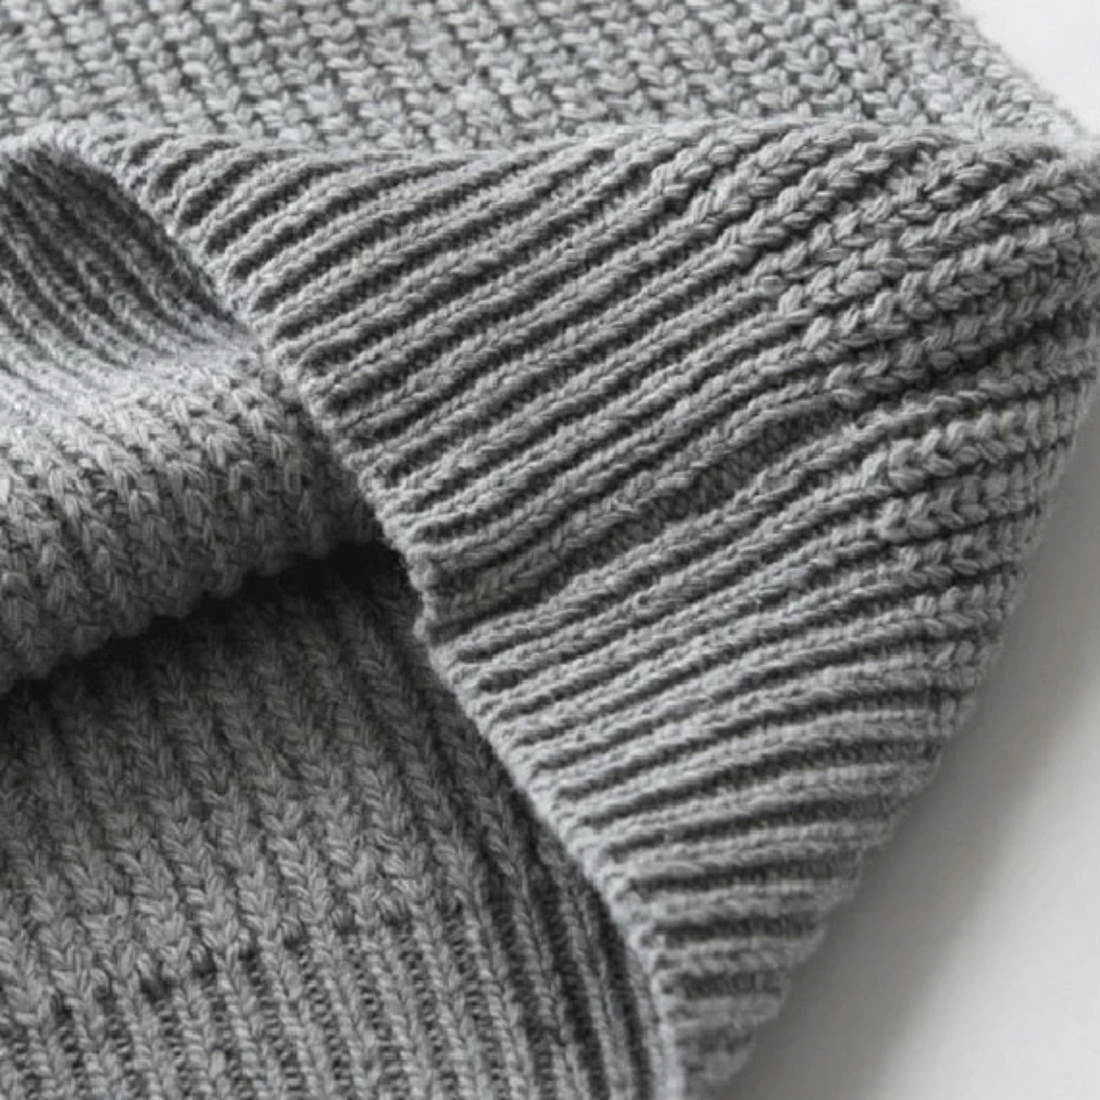 Men's Autumn/Winter Warm Knitted Sweater